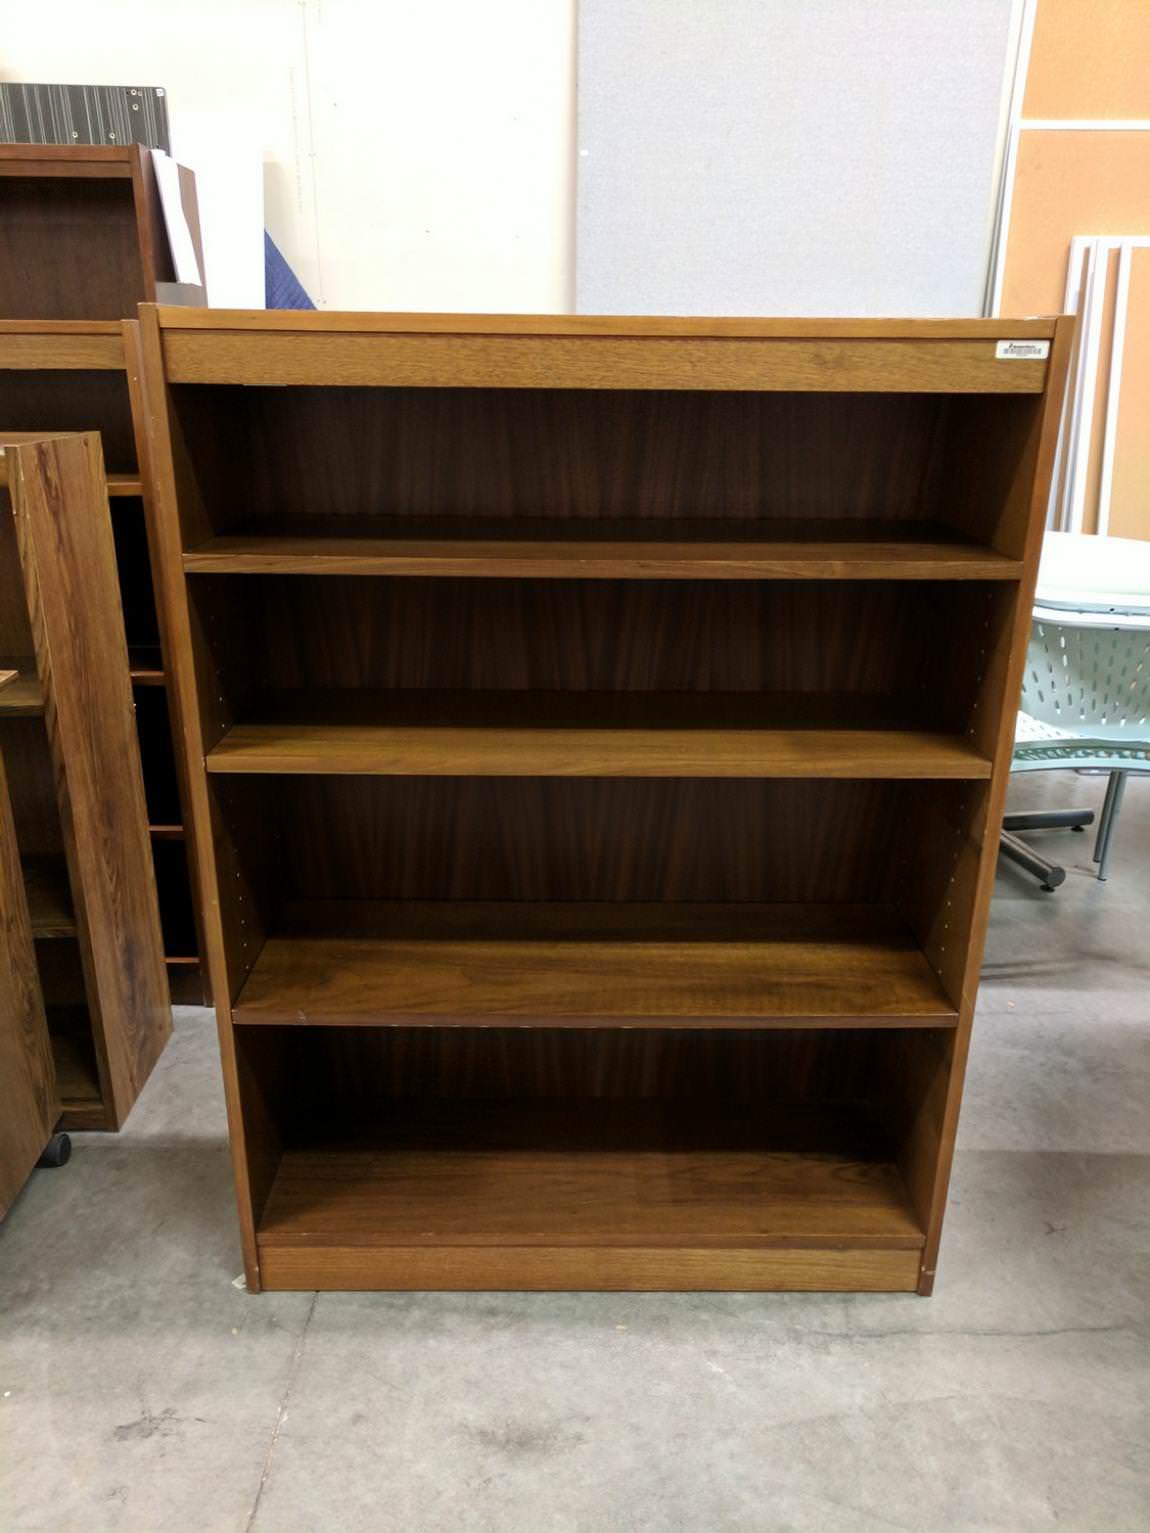 Wood Bookshelf with Cherry Finish - 36 Inch Wide